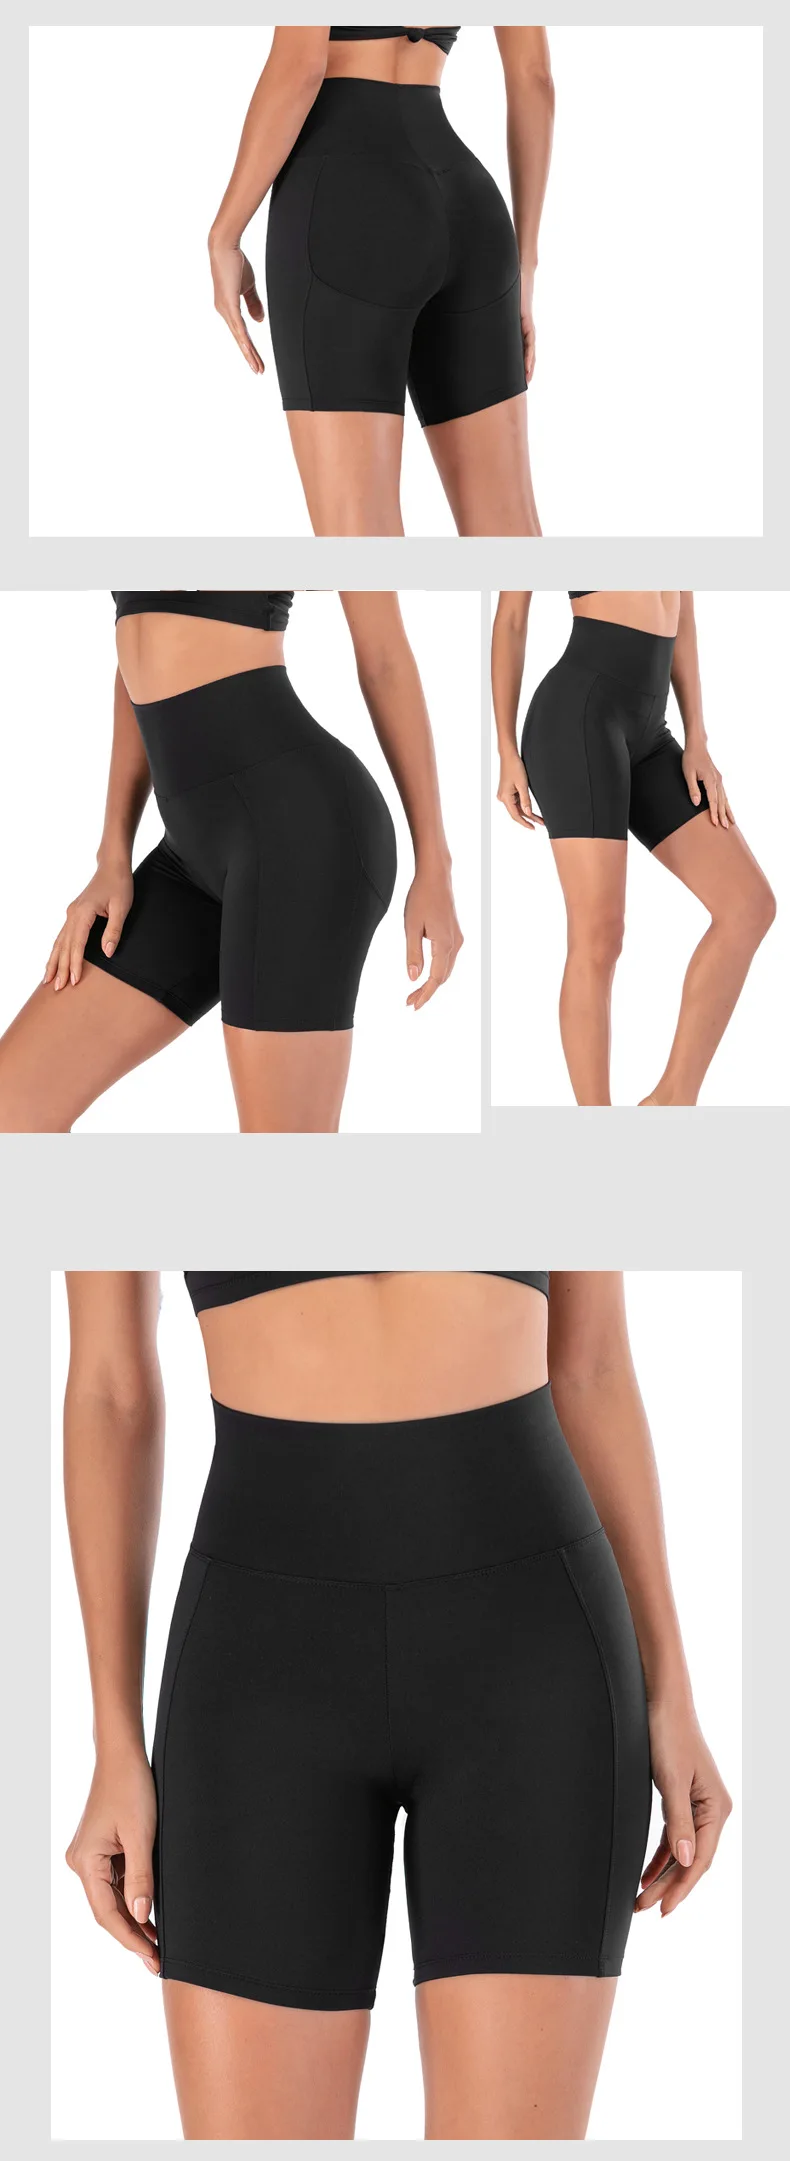 Wholesale Custom Workout Legging Shorts Tight Yoga Fitness Gym Seamless ...